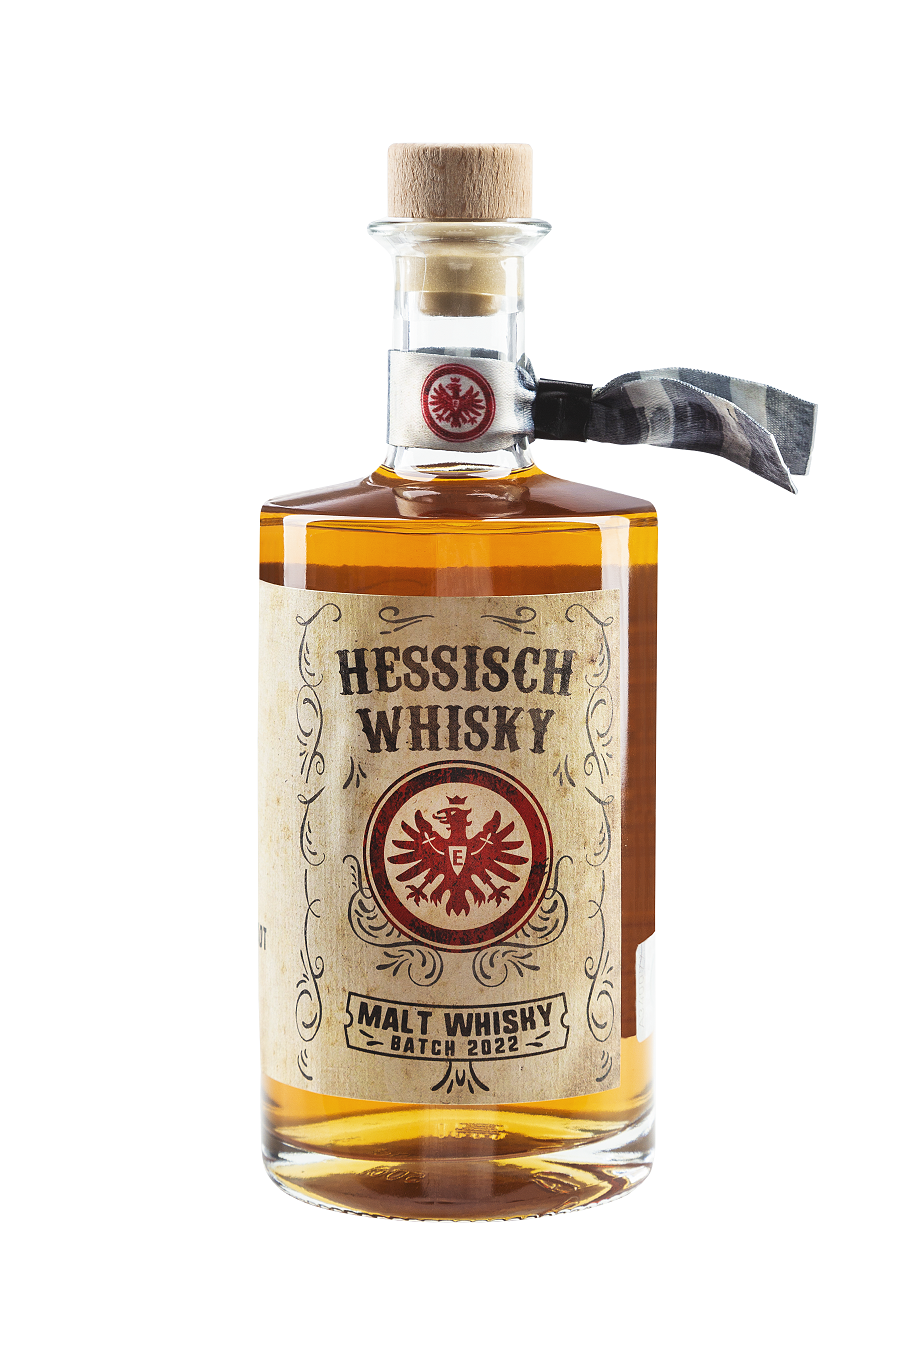 Hessisch Whisky - Eintracht Frankfurt Whisky - Malt Whisky - Batch 2022 - 0,5l 42%vol.